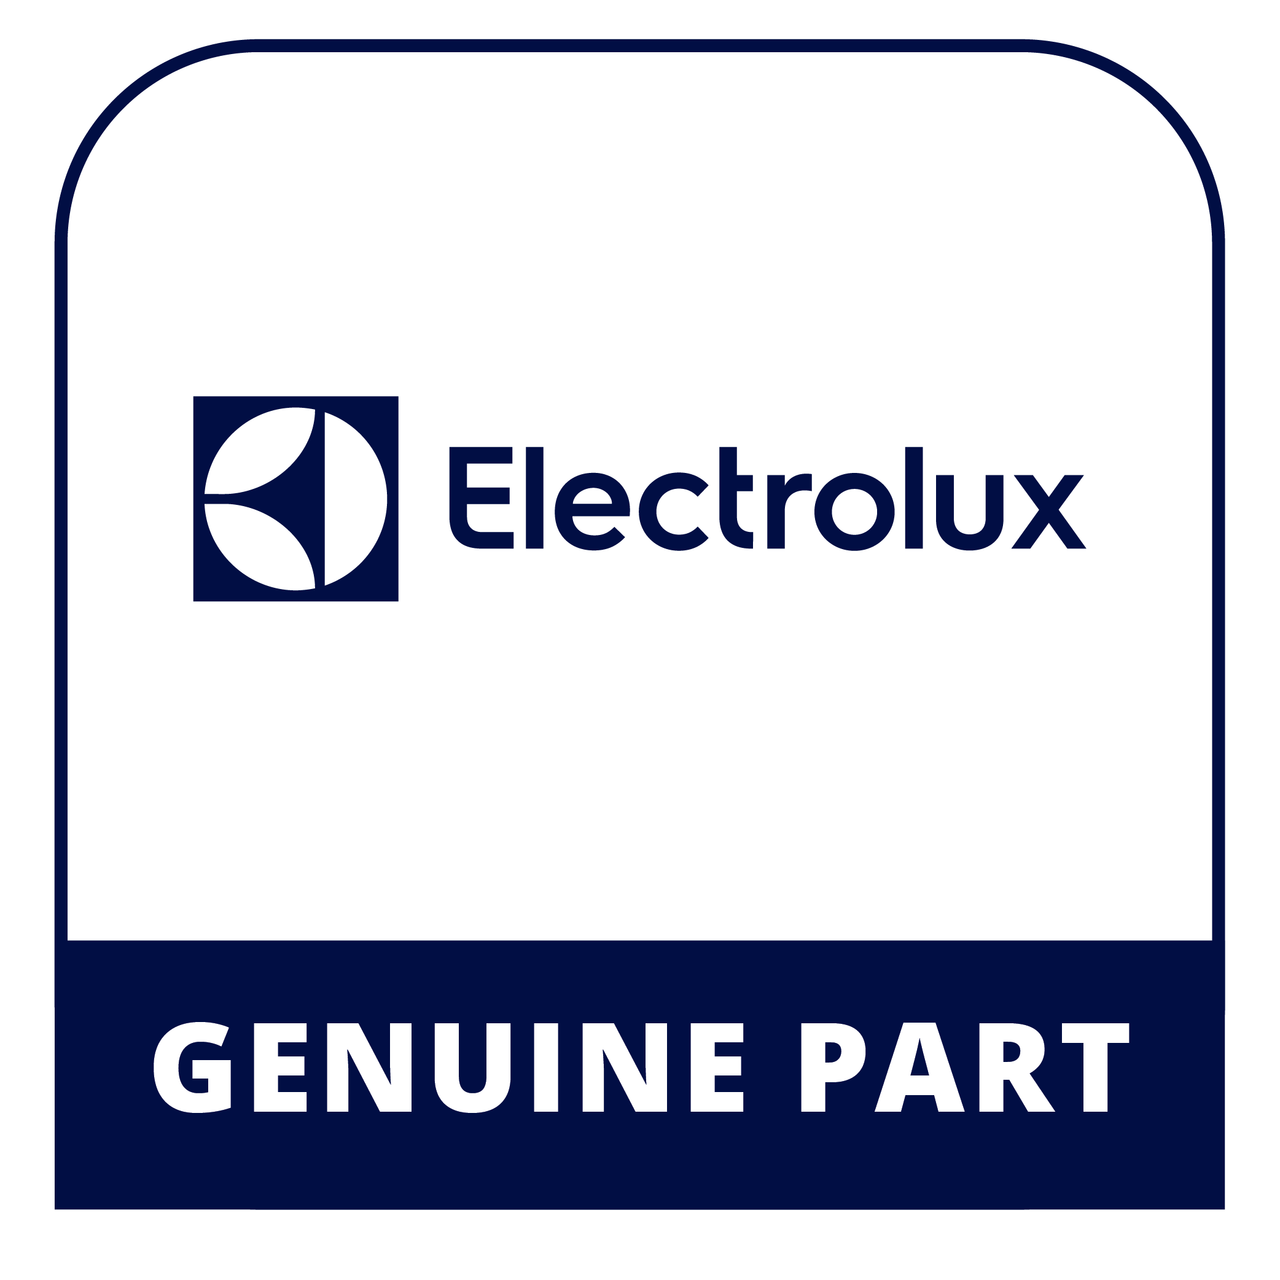 Frigidaire - Electrolux 5304515501 Slide - Genuine Electrolux Part